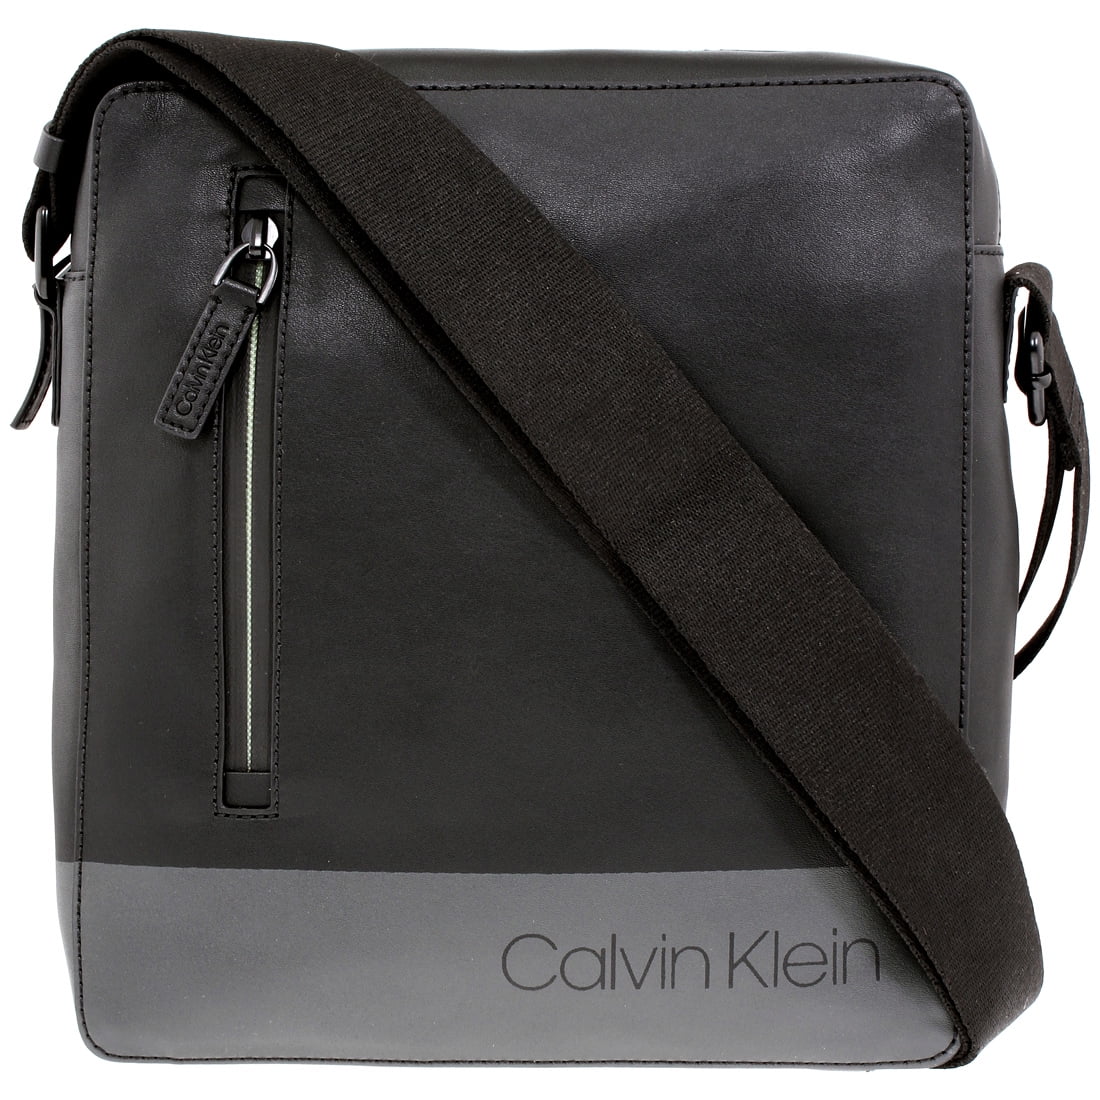 calvin klein handbag warranty